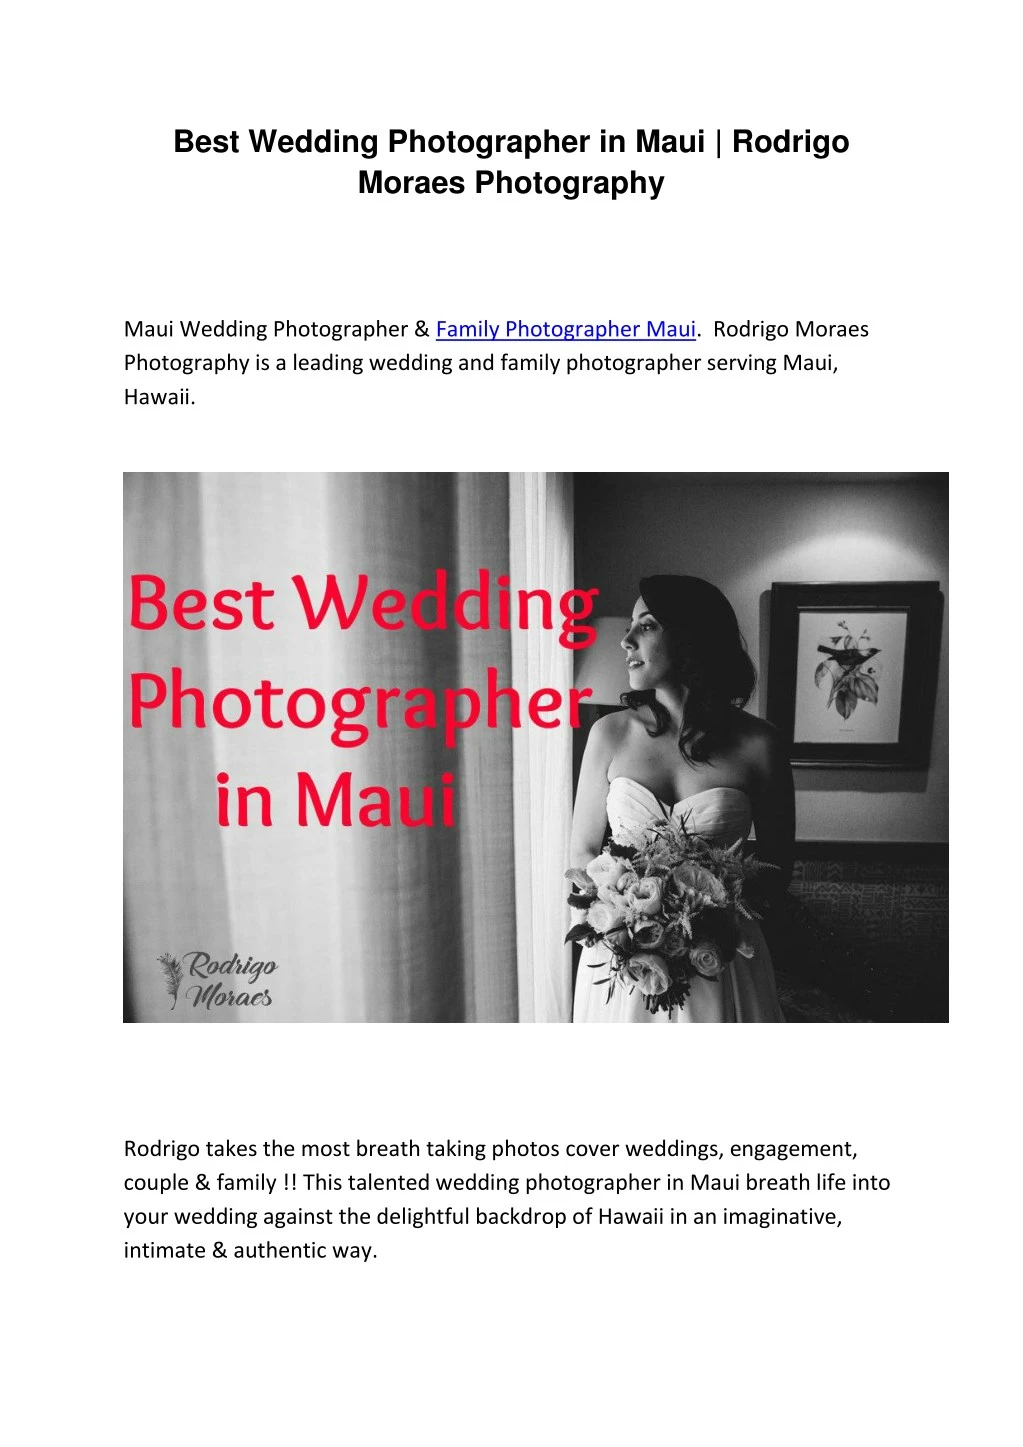 best wedding photographer in maui rodrigo moraes